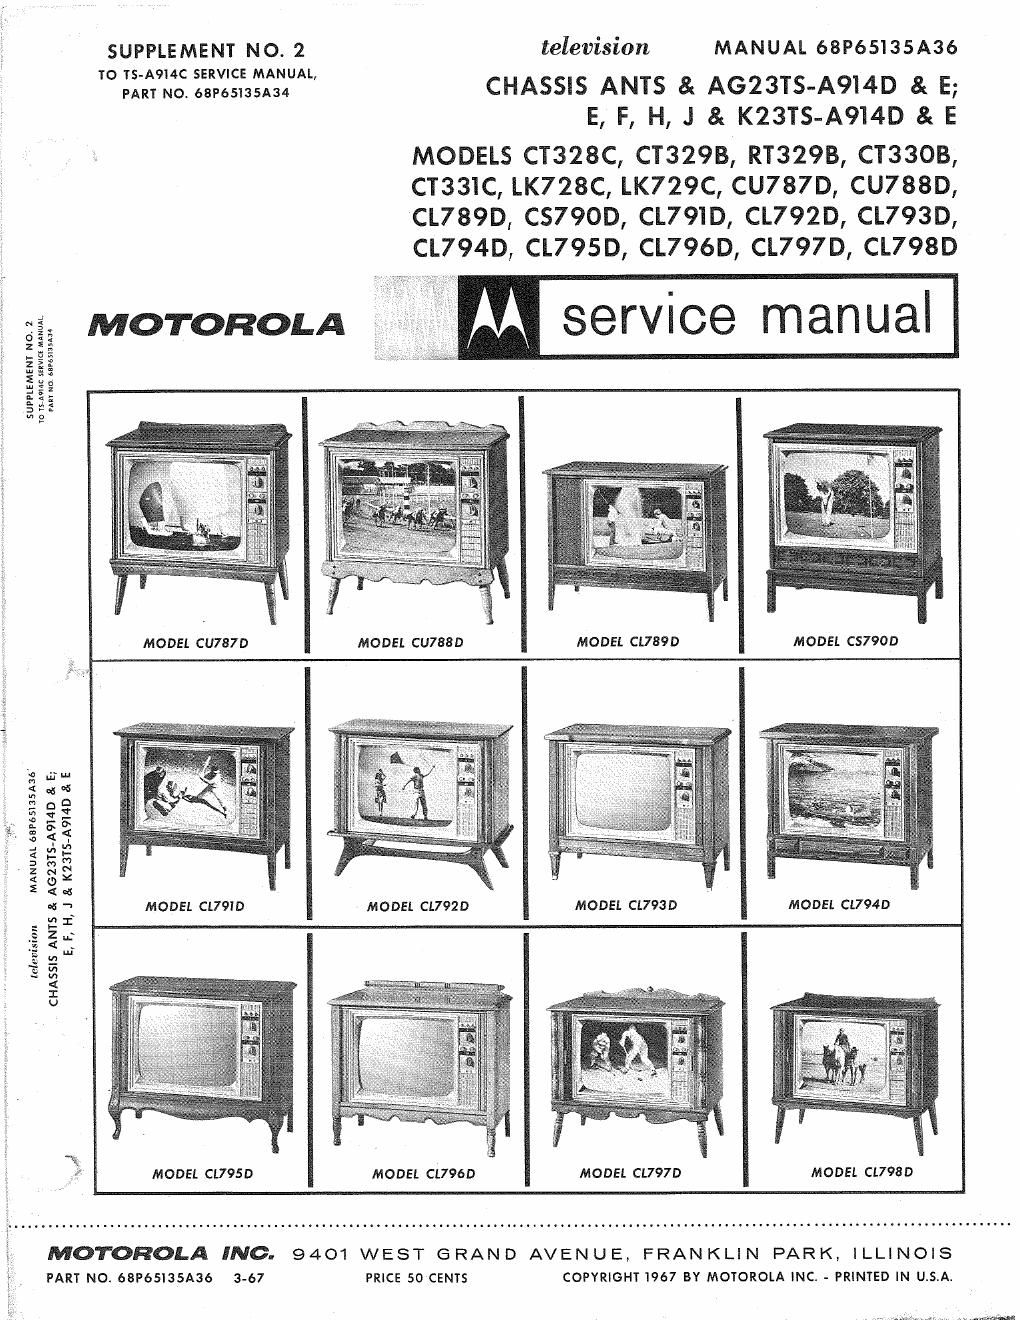 motorola lk 729 c service manual